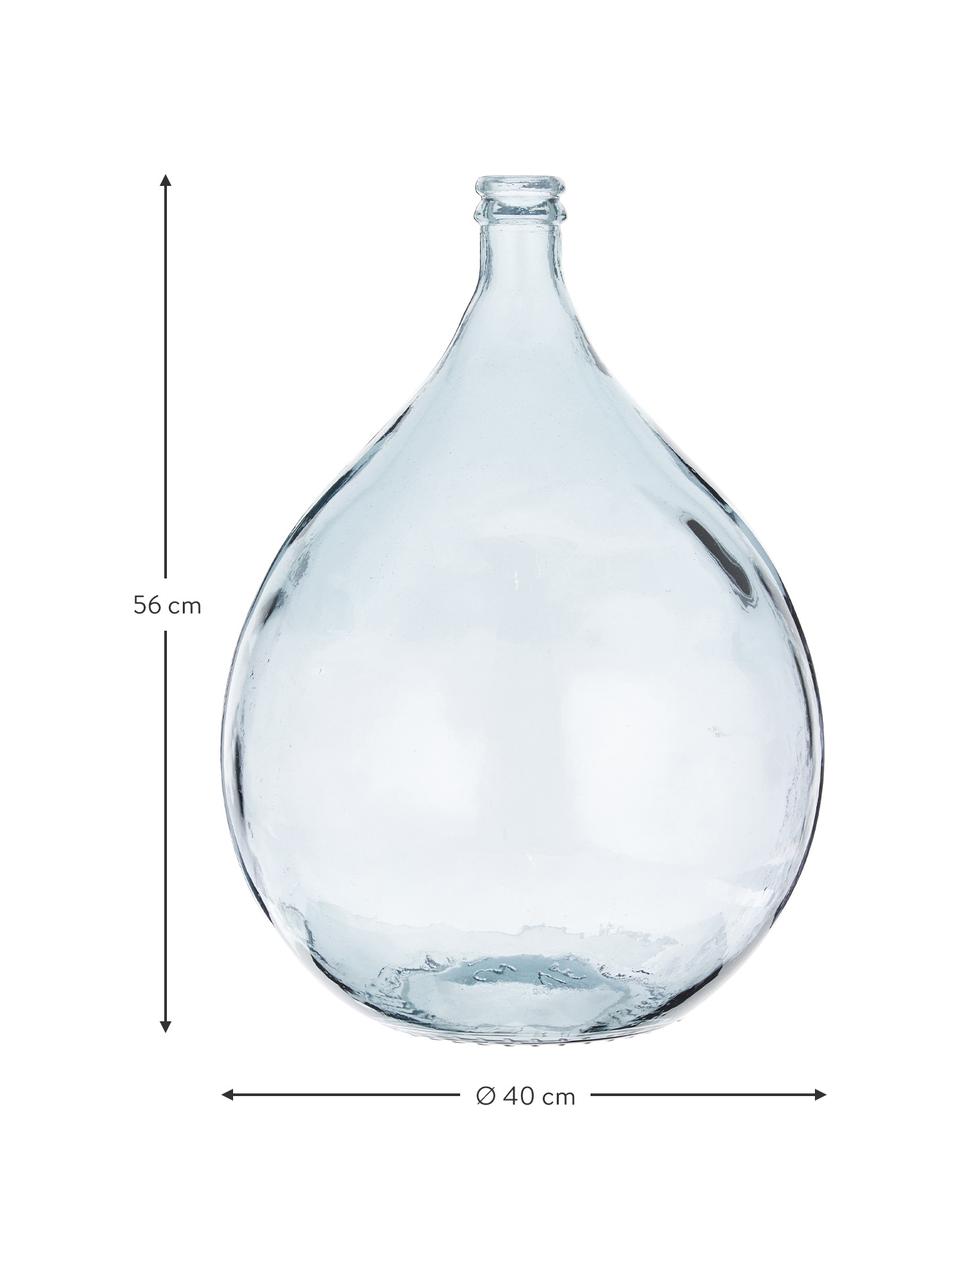 Podlahová váza z recyklovaného skla Drop, Recyklované sklo, Modrá, Ø 40 cm, V 56 cm